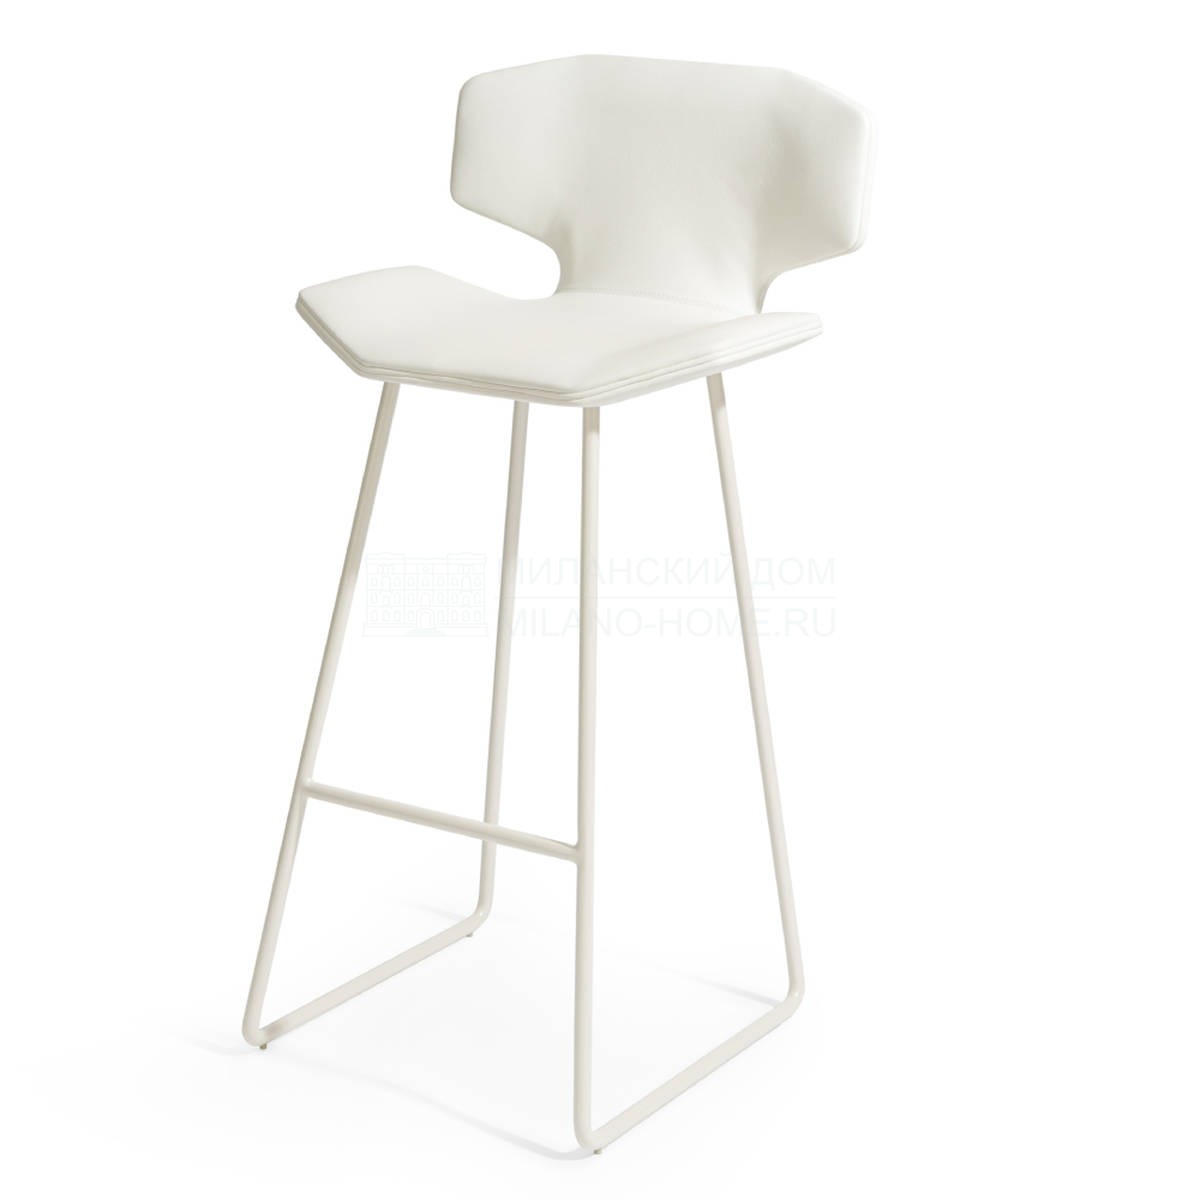 Барный стул Albatros chair из Италии фабрики IPE CAVALLI VISIONNAIRE